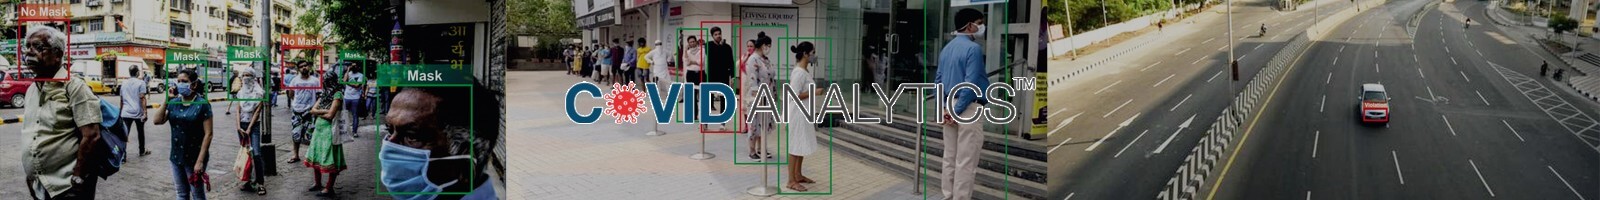 COVID Analytics™ - AI based Intelligent Analytics Solutions